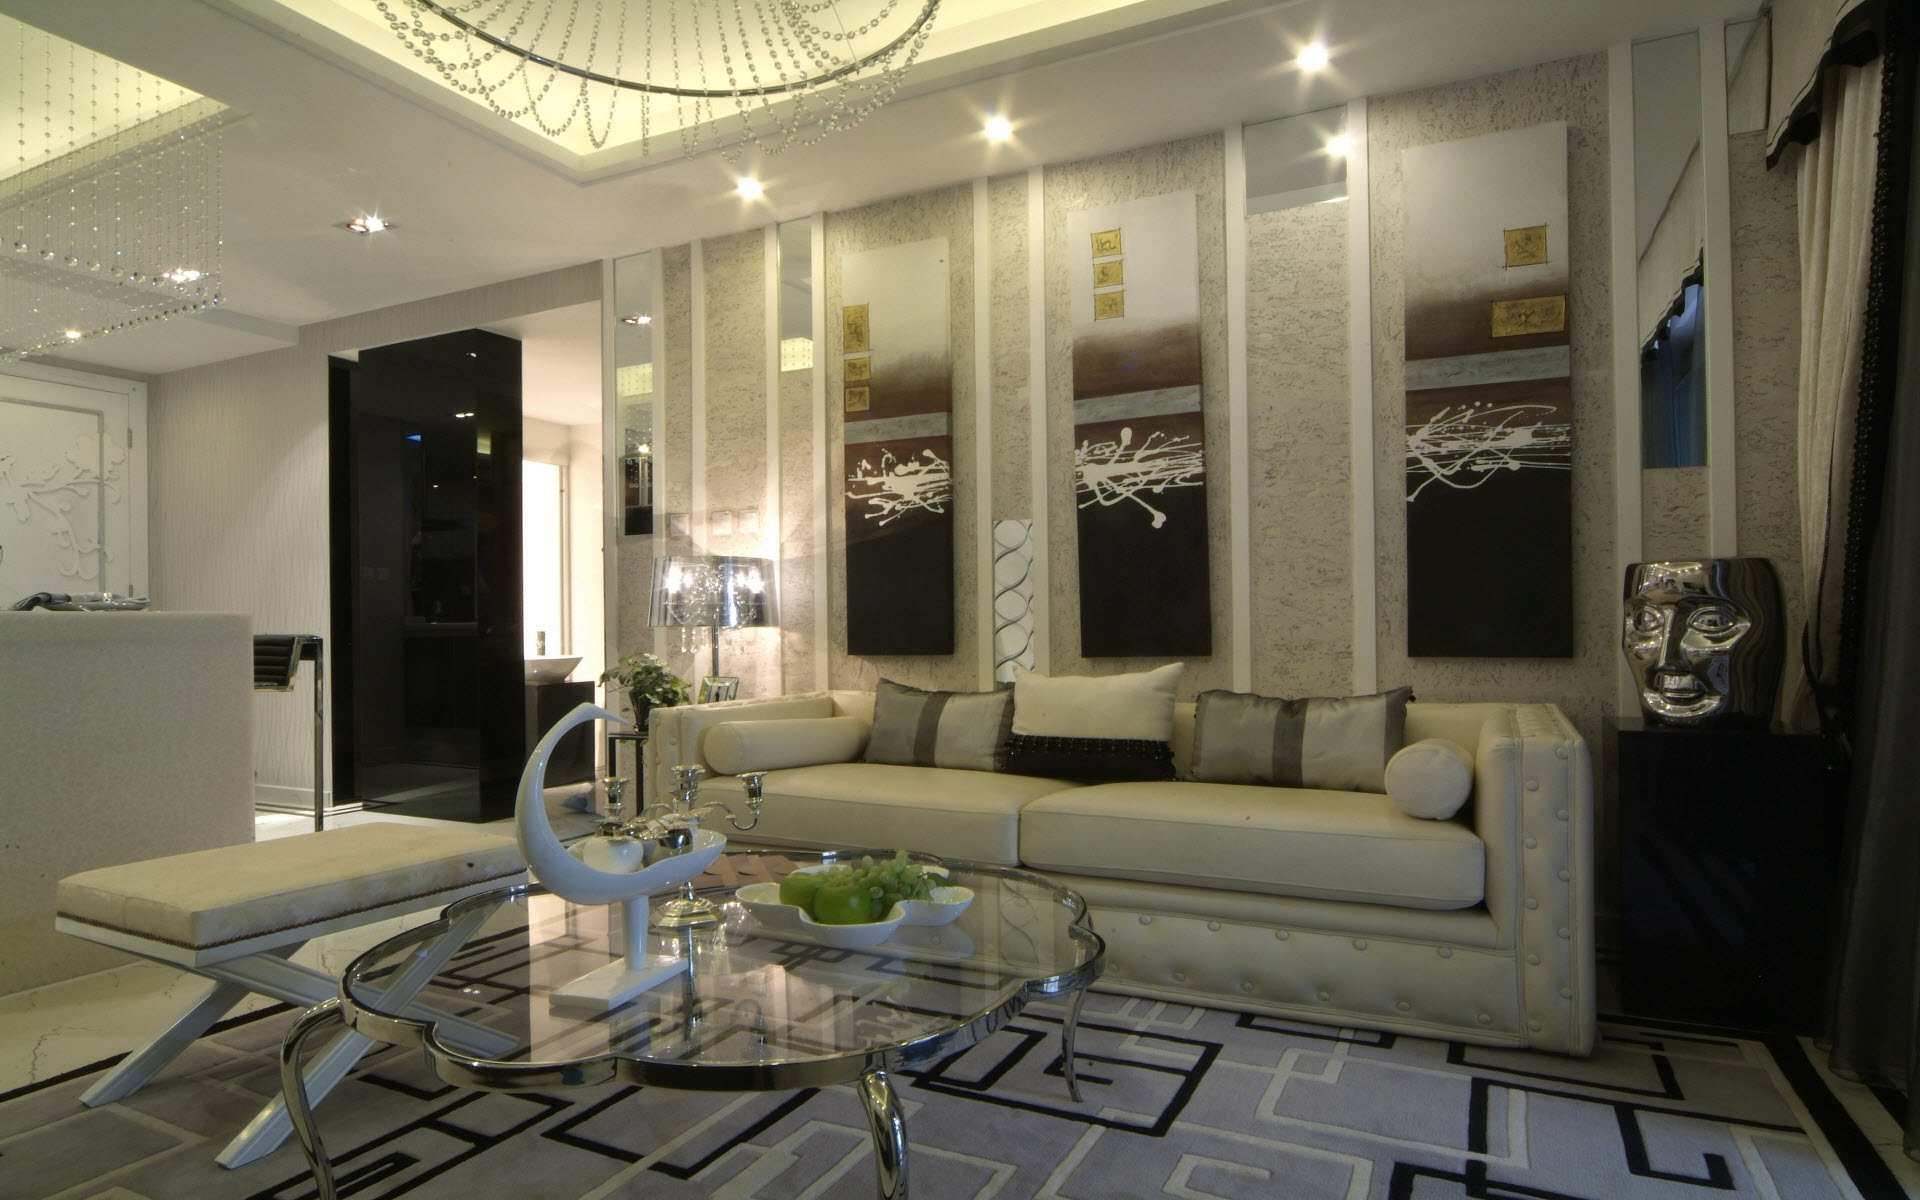 Room design modern living room designs with grey decorative wallpaper 1920x1200